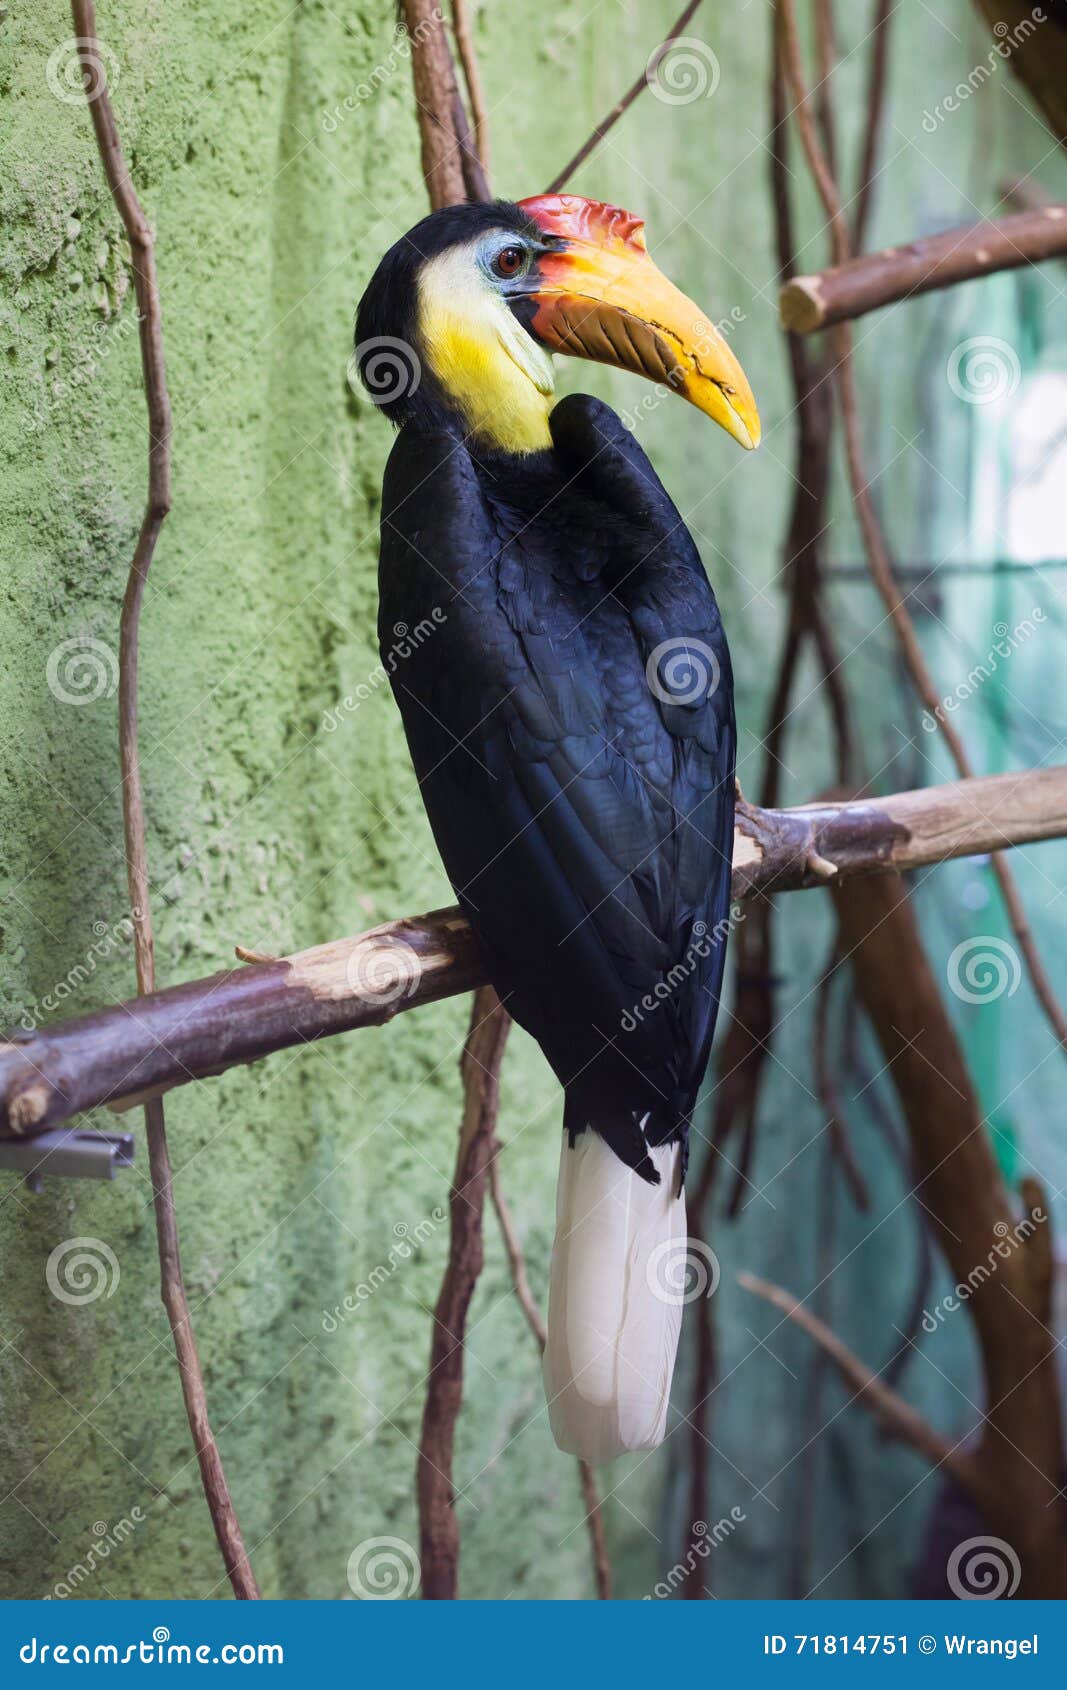 sunda wrinkled hornbill (aceros corrugatus).